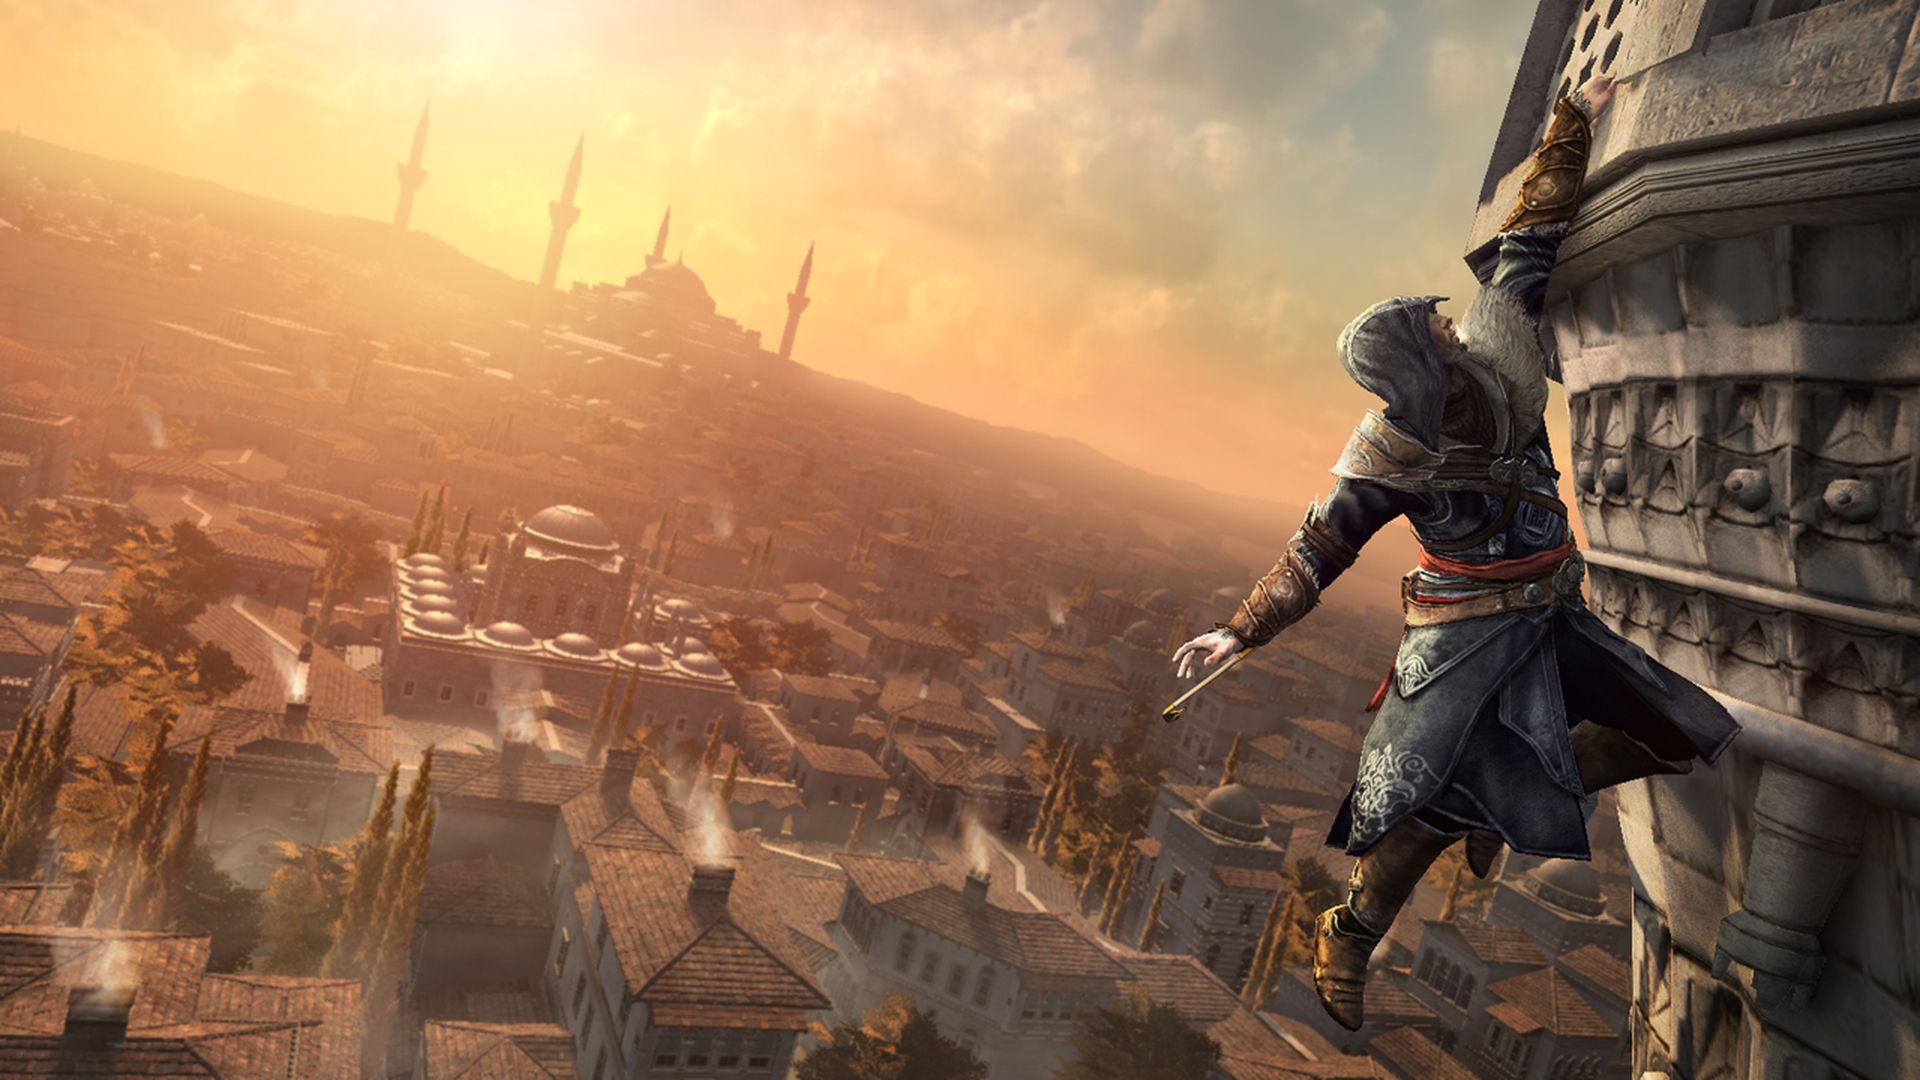  Assassins Creed Revelations Signature Edition : Video